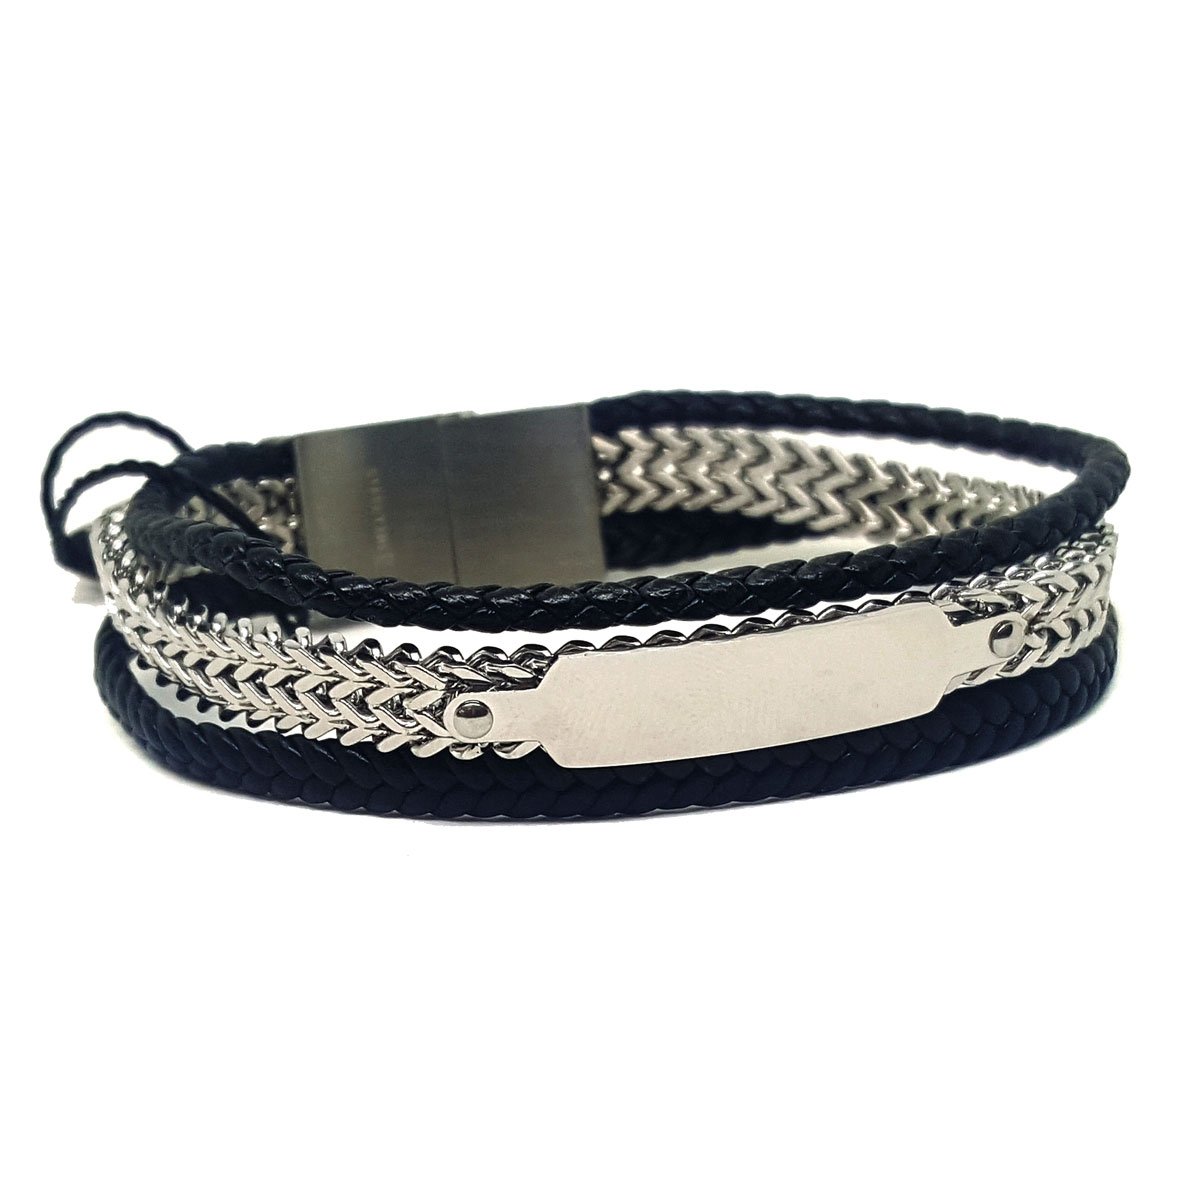 (mban-0424-1-h4) Stainless Steel Leather Bracelet For Men.